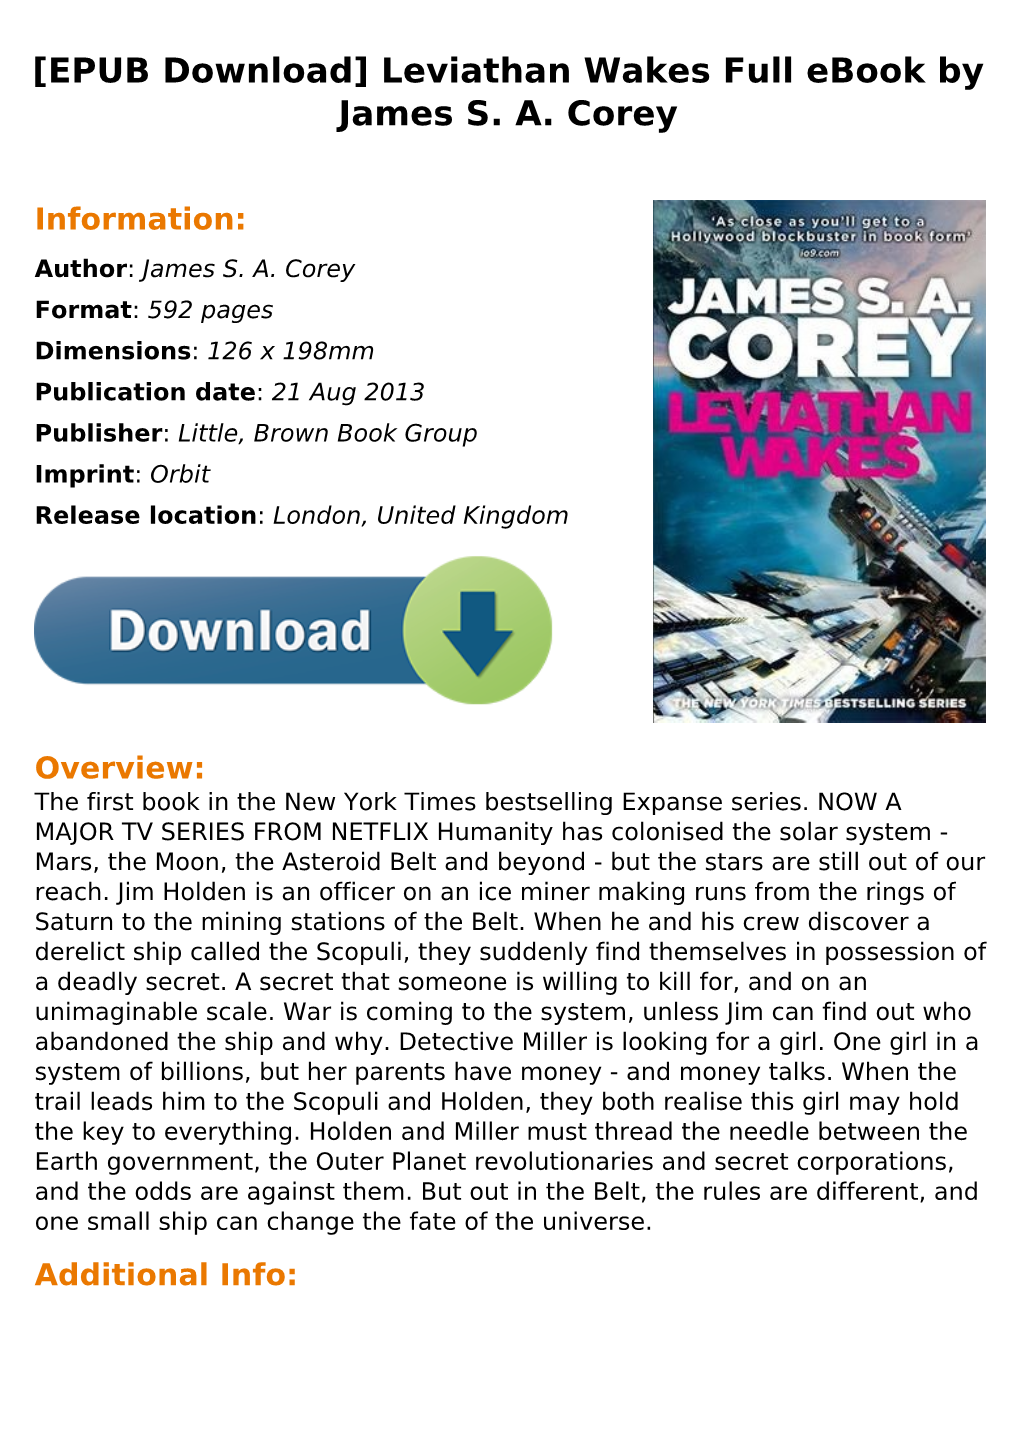 [EPUB Download] Leviathan Wakes Full Ebook by James S. A. Corey